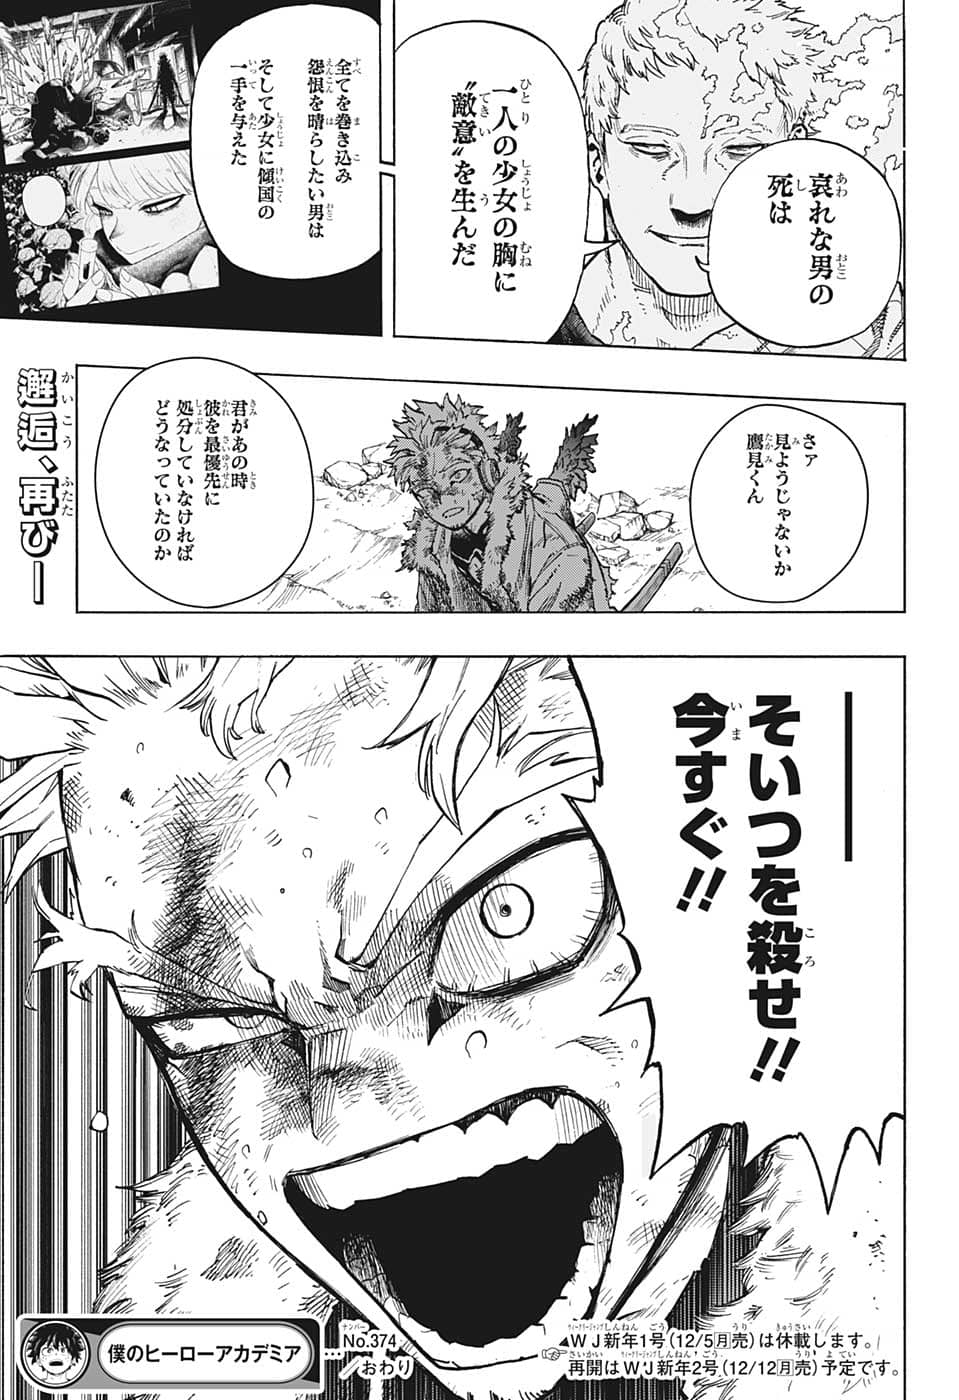 Boku no Hero Academia - Chapter 374 - Page 13